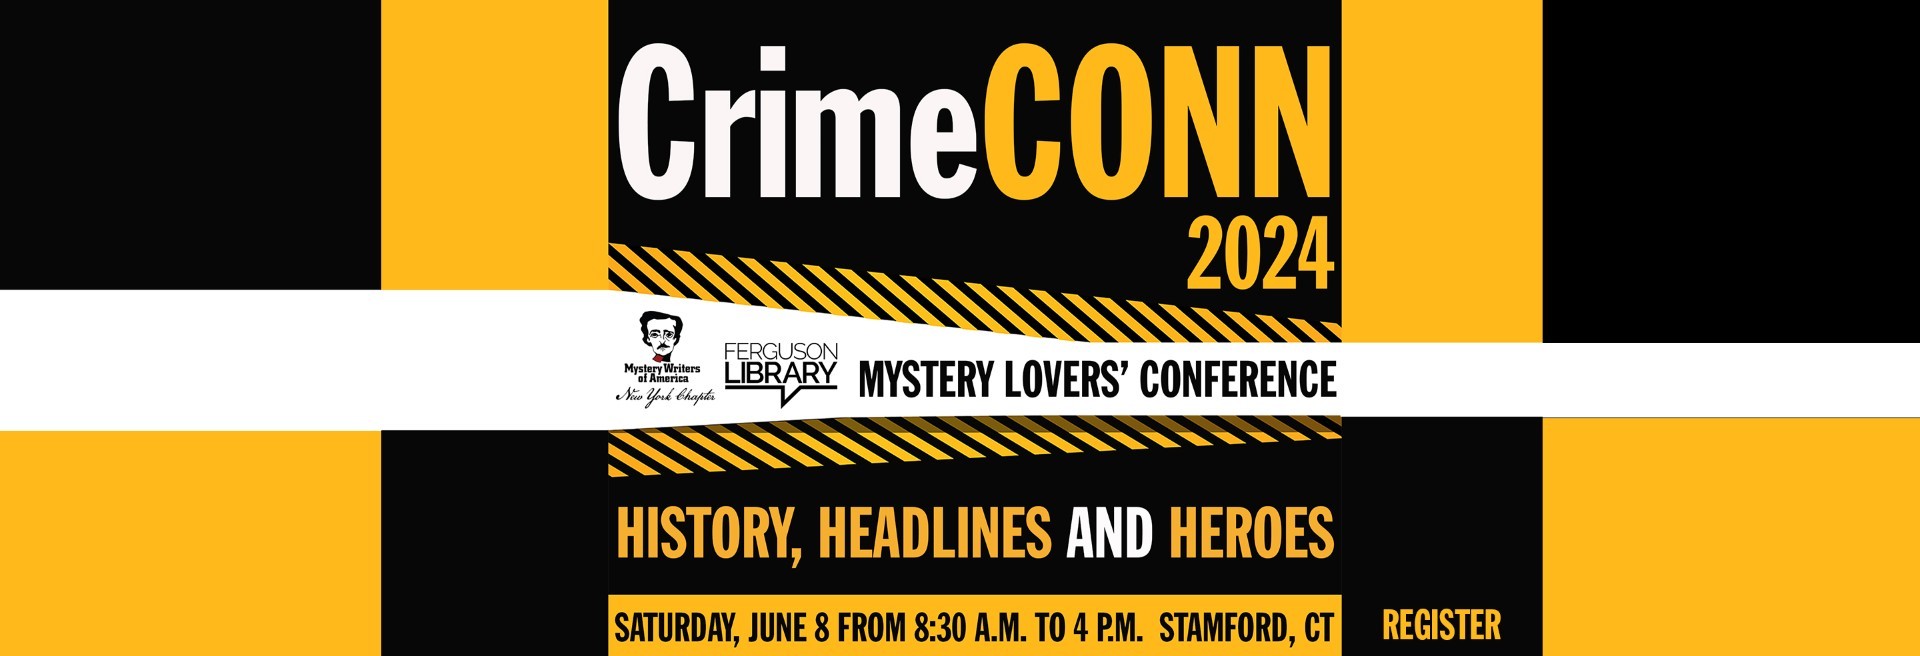 CrimeConn Brand 2024 Web.jpg 